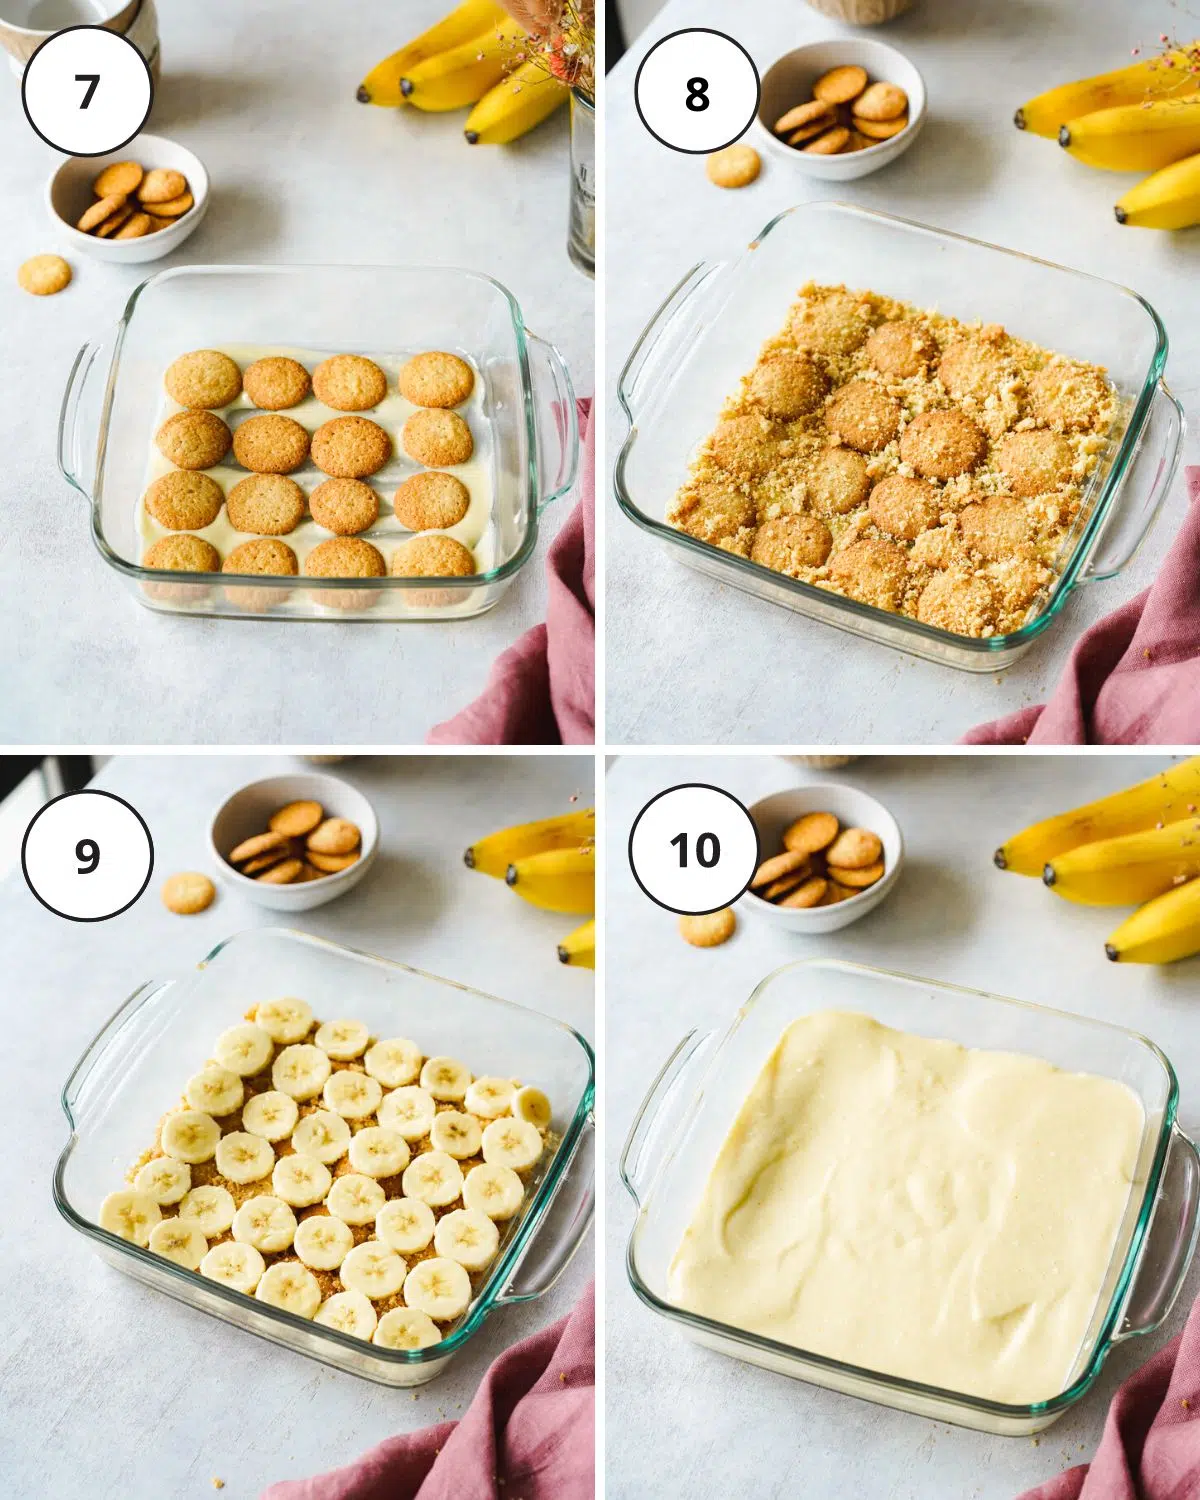 assembling banana pudding in a glass baking dish.